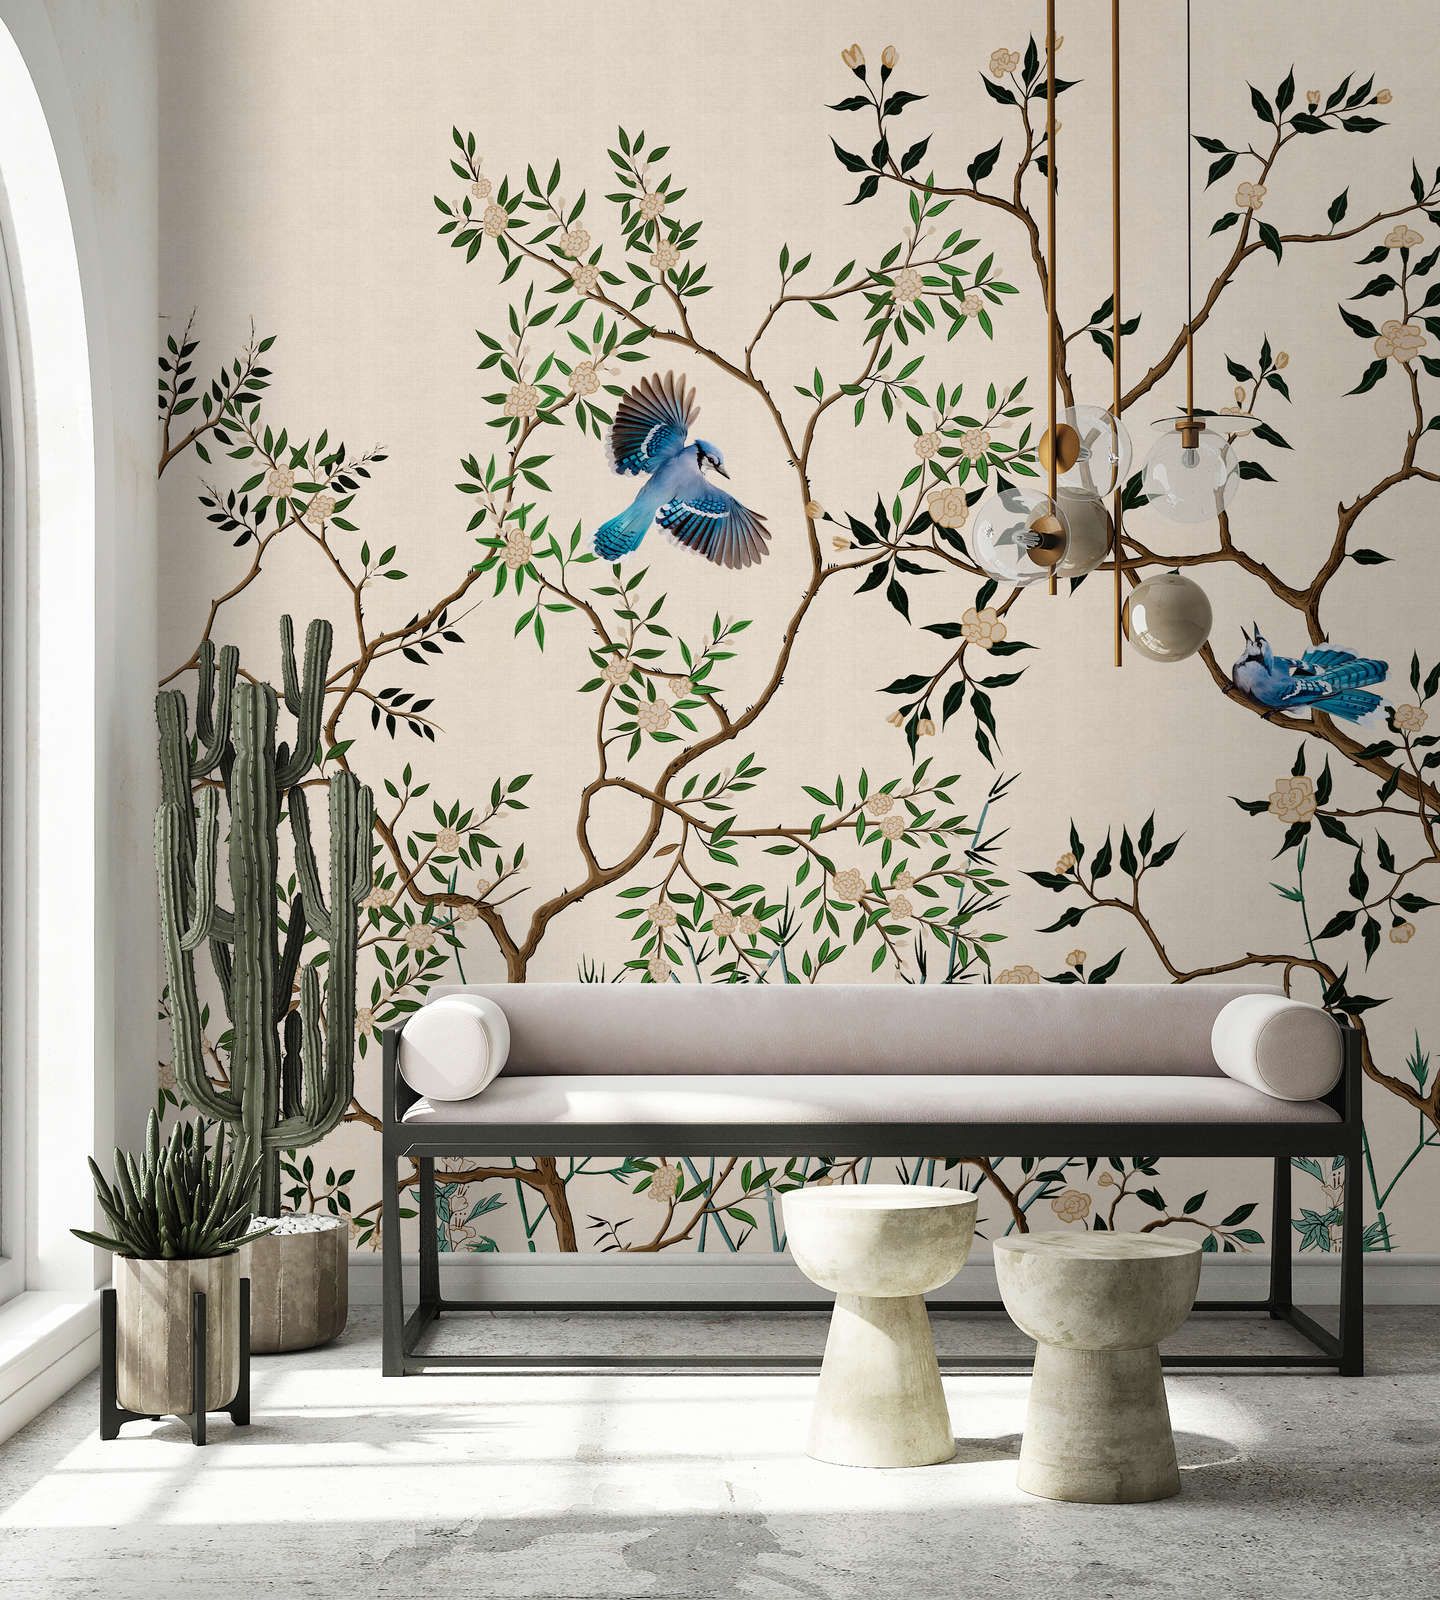             Photo wallpaper »merula« - branches & birds - light with linen texture | Smooth, slightly shiny premium non-woven fabric
        